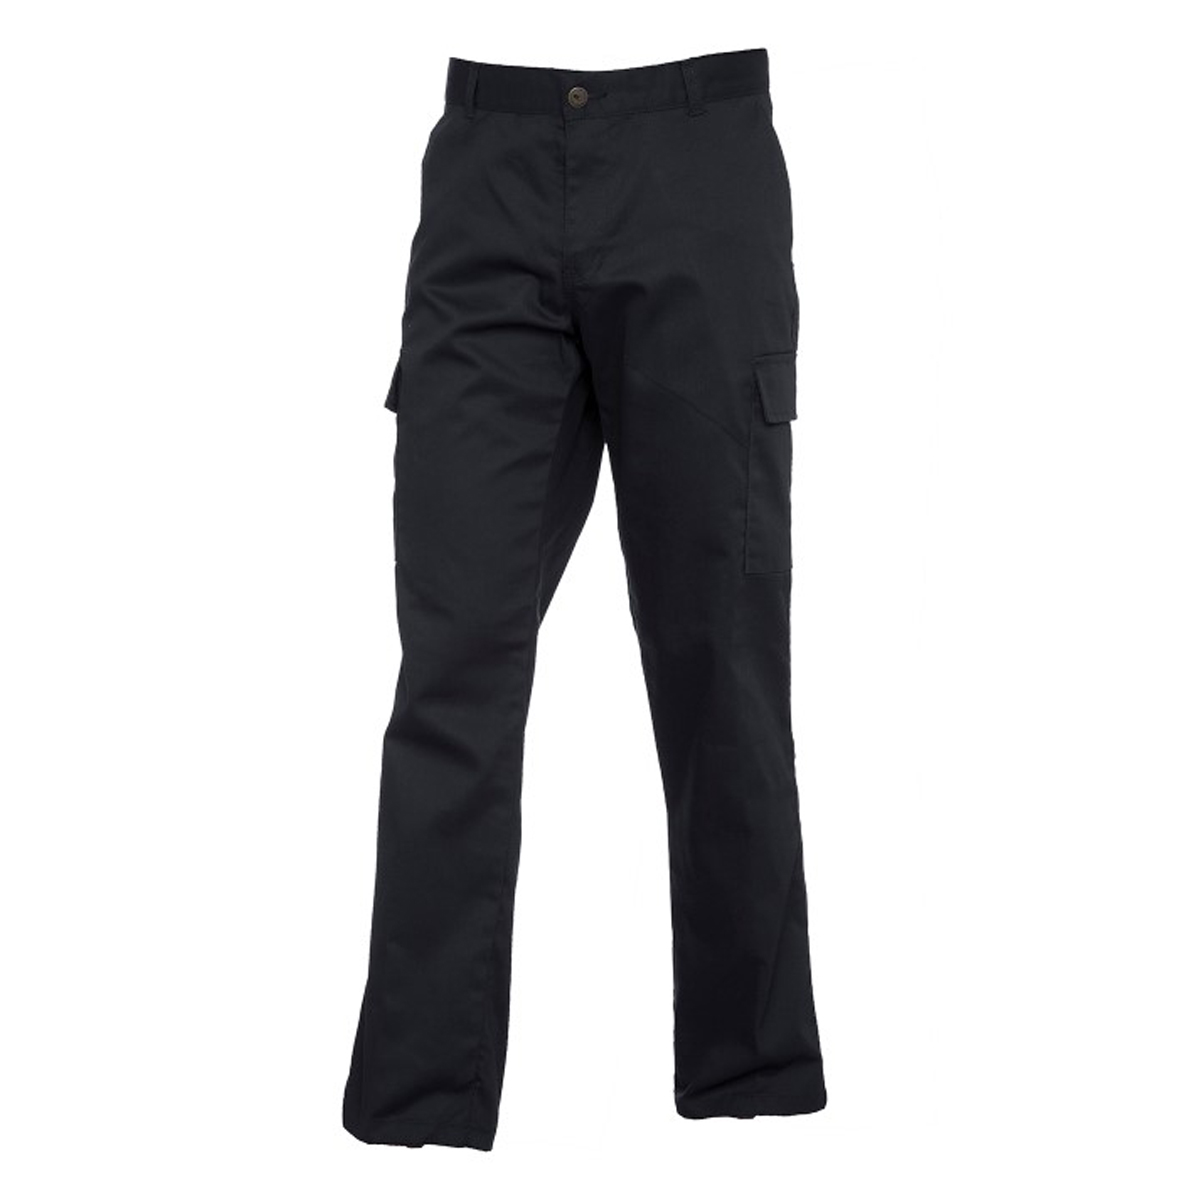 Uc905 ladies cargo trousers - black - size 10